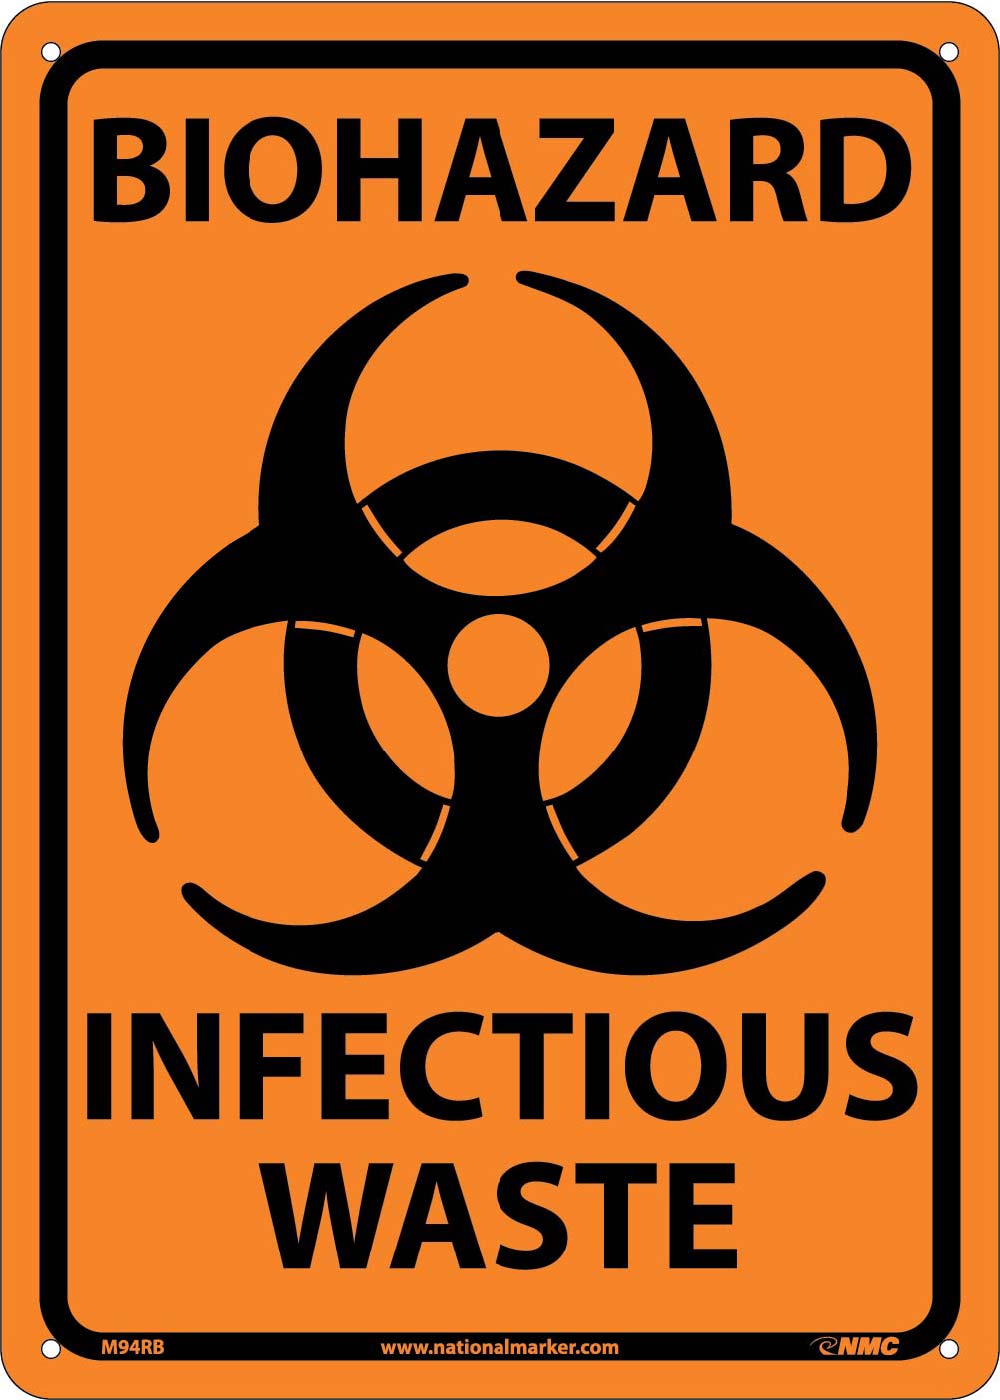 Biohazard Infectious Waste Sign-eSafety Supplies, Inc